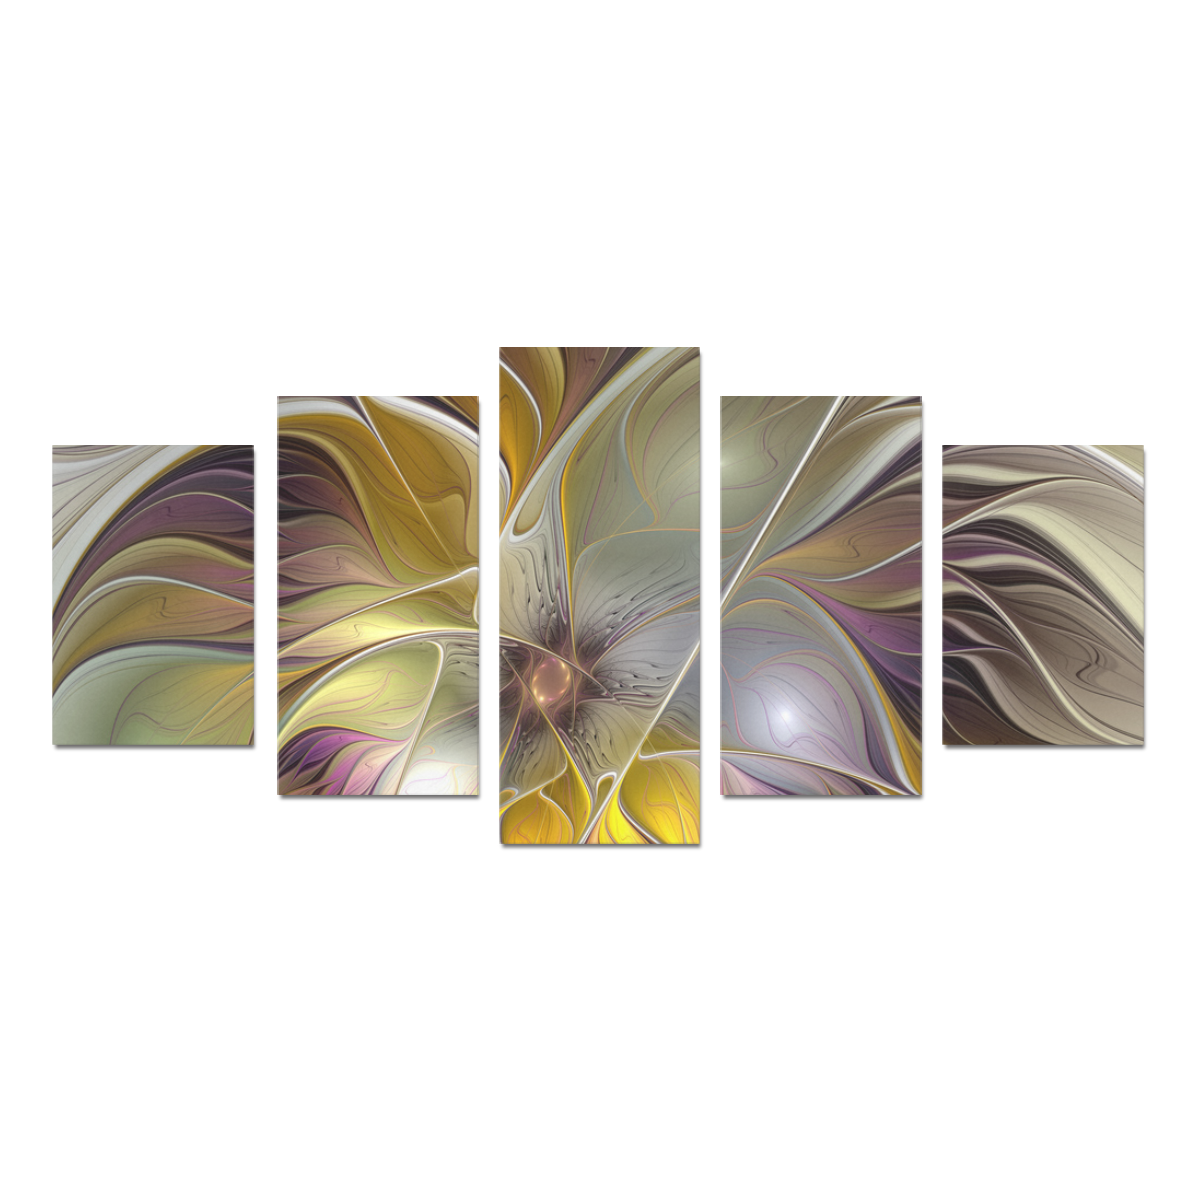 Abstract Colorful Fantasy Flower Modern Fractal Canvas Print Sets D (No Frame)